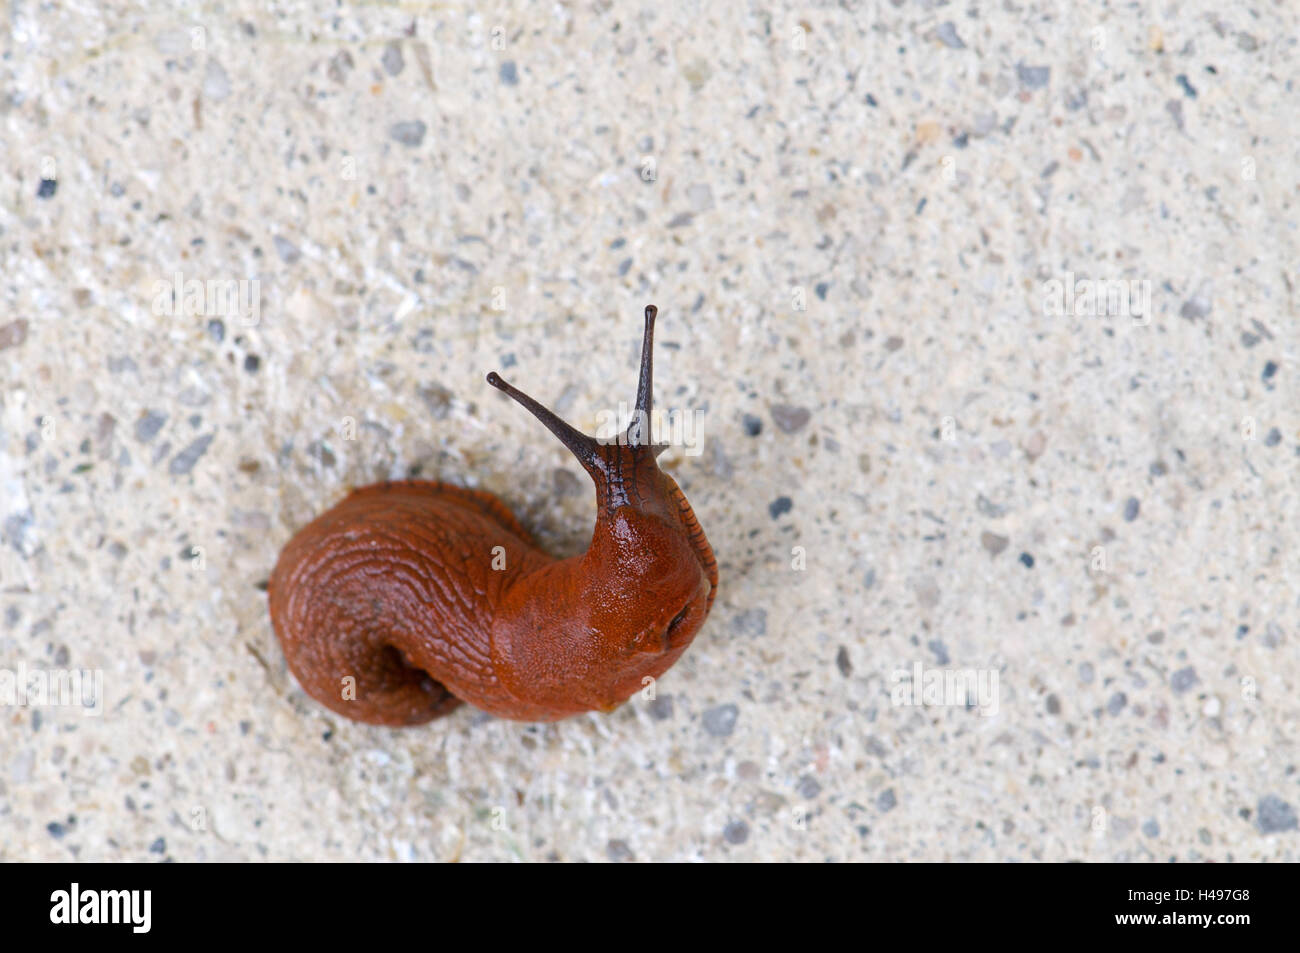 Slug on concrete floor, Stock Photo